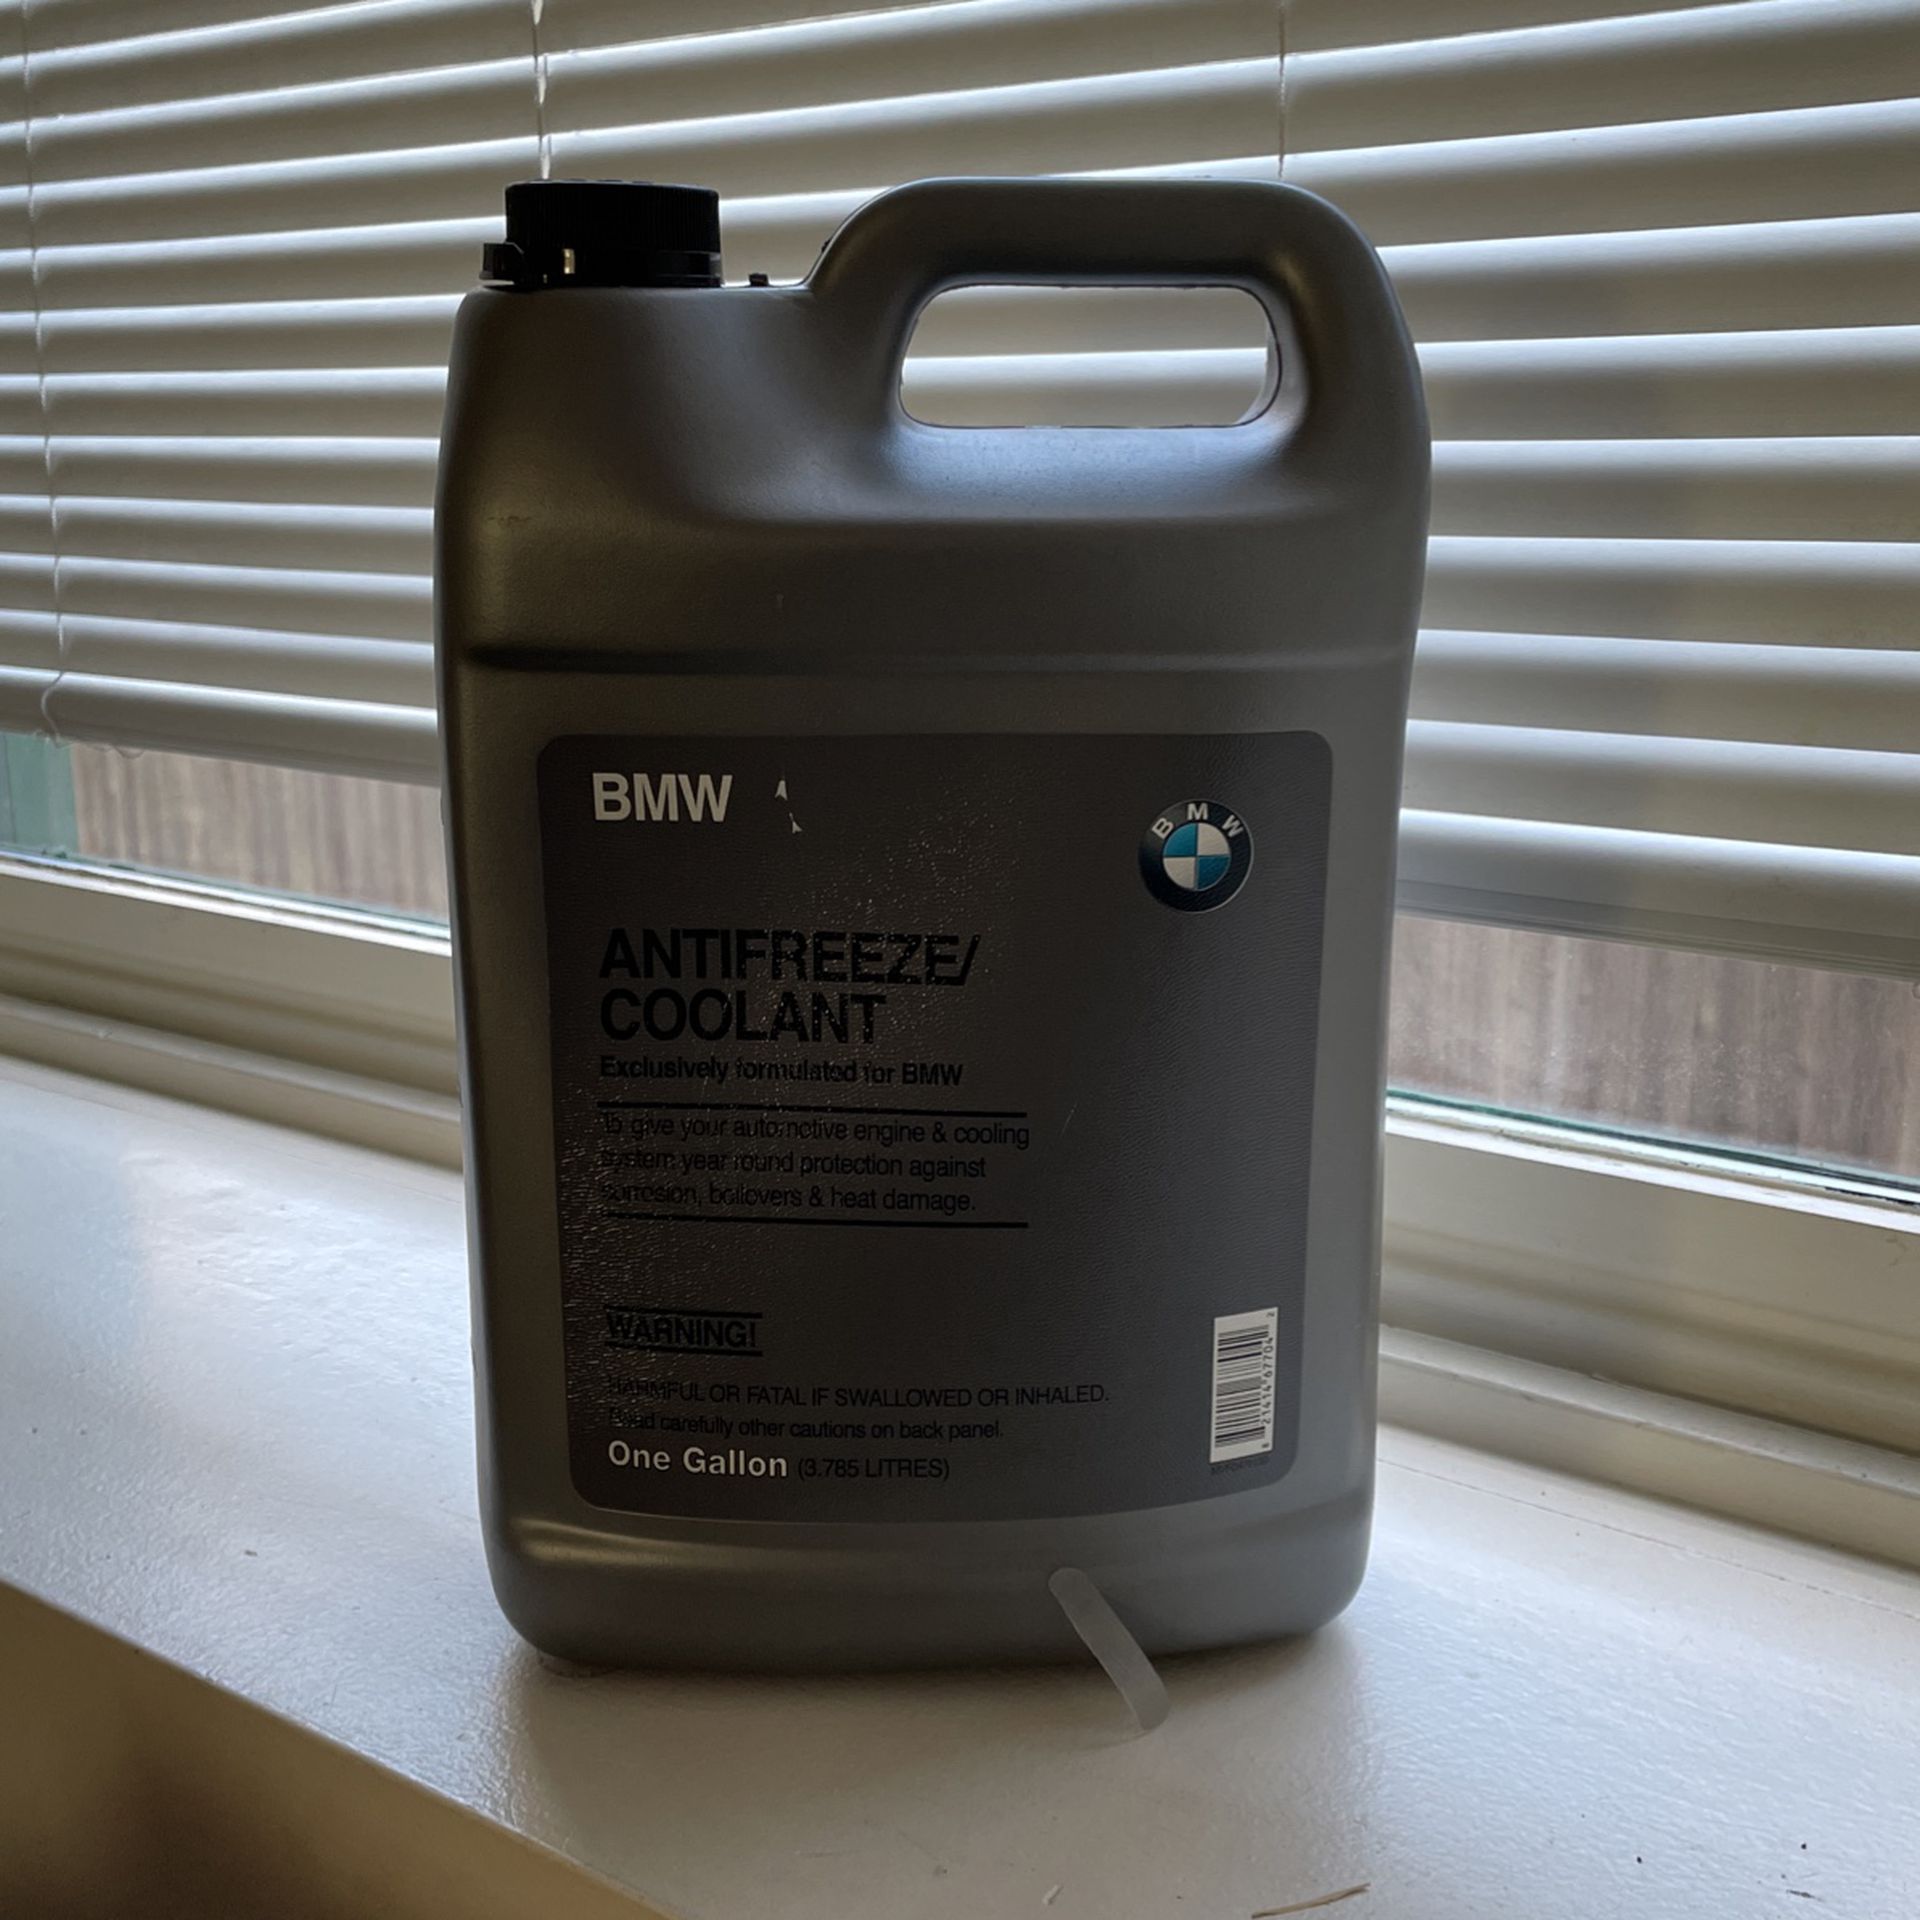 BMW Coolant / Antifreeze - 1 Gallon